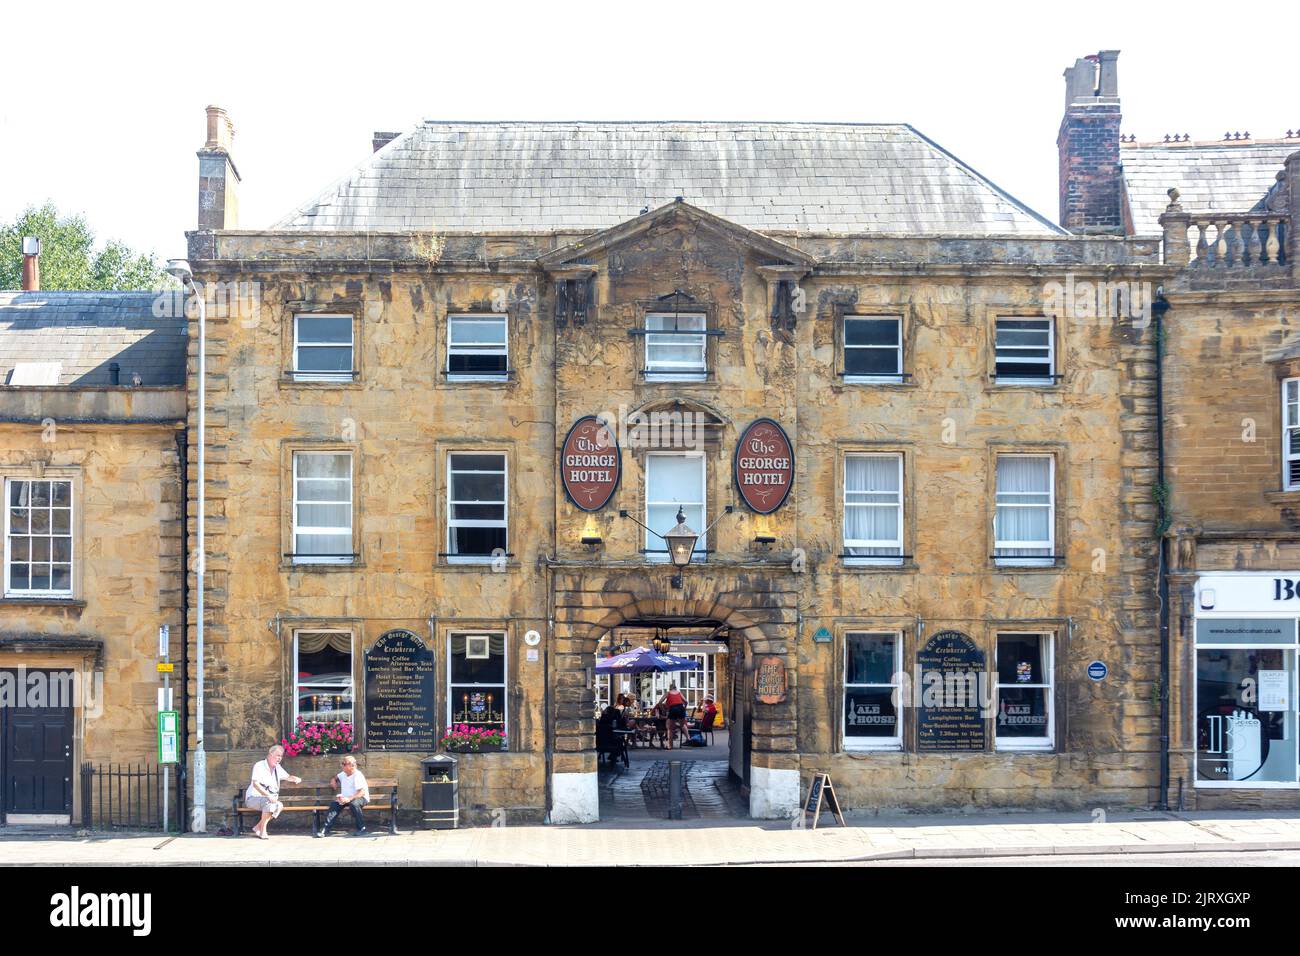 16th century The George Hotel, Market Square, Crewkerne, Somerset, England, United Kingdom Stock Photo